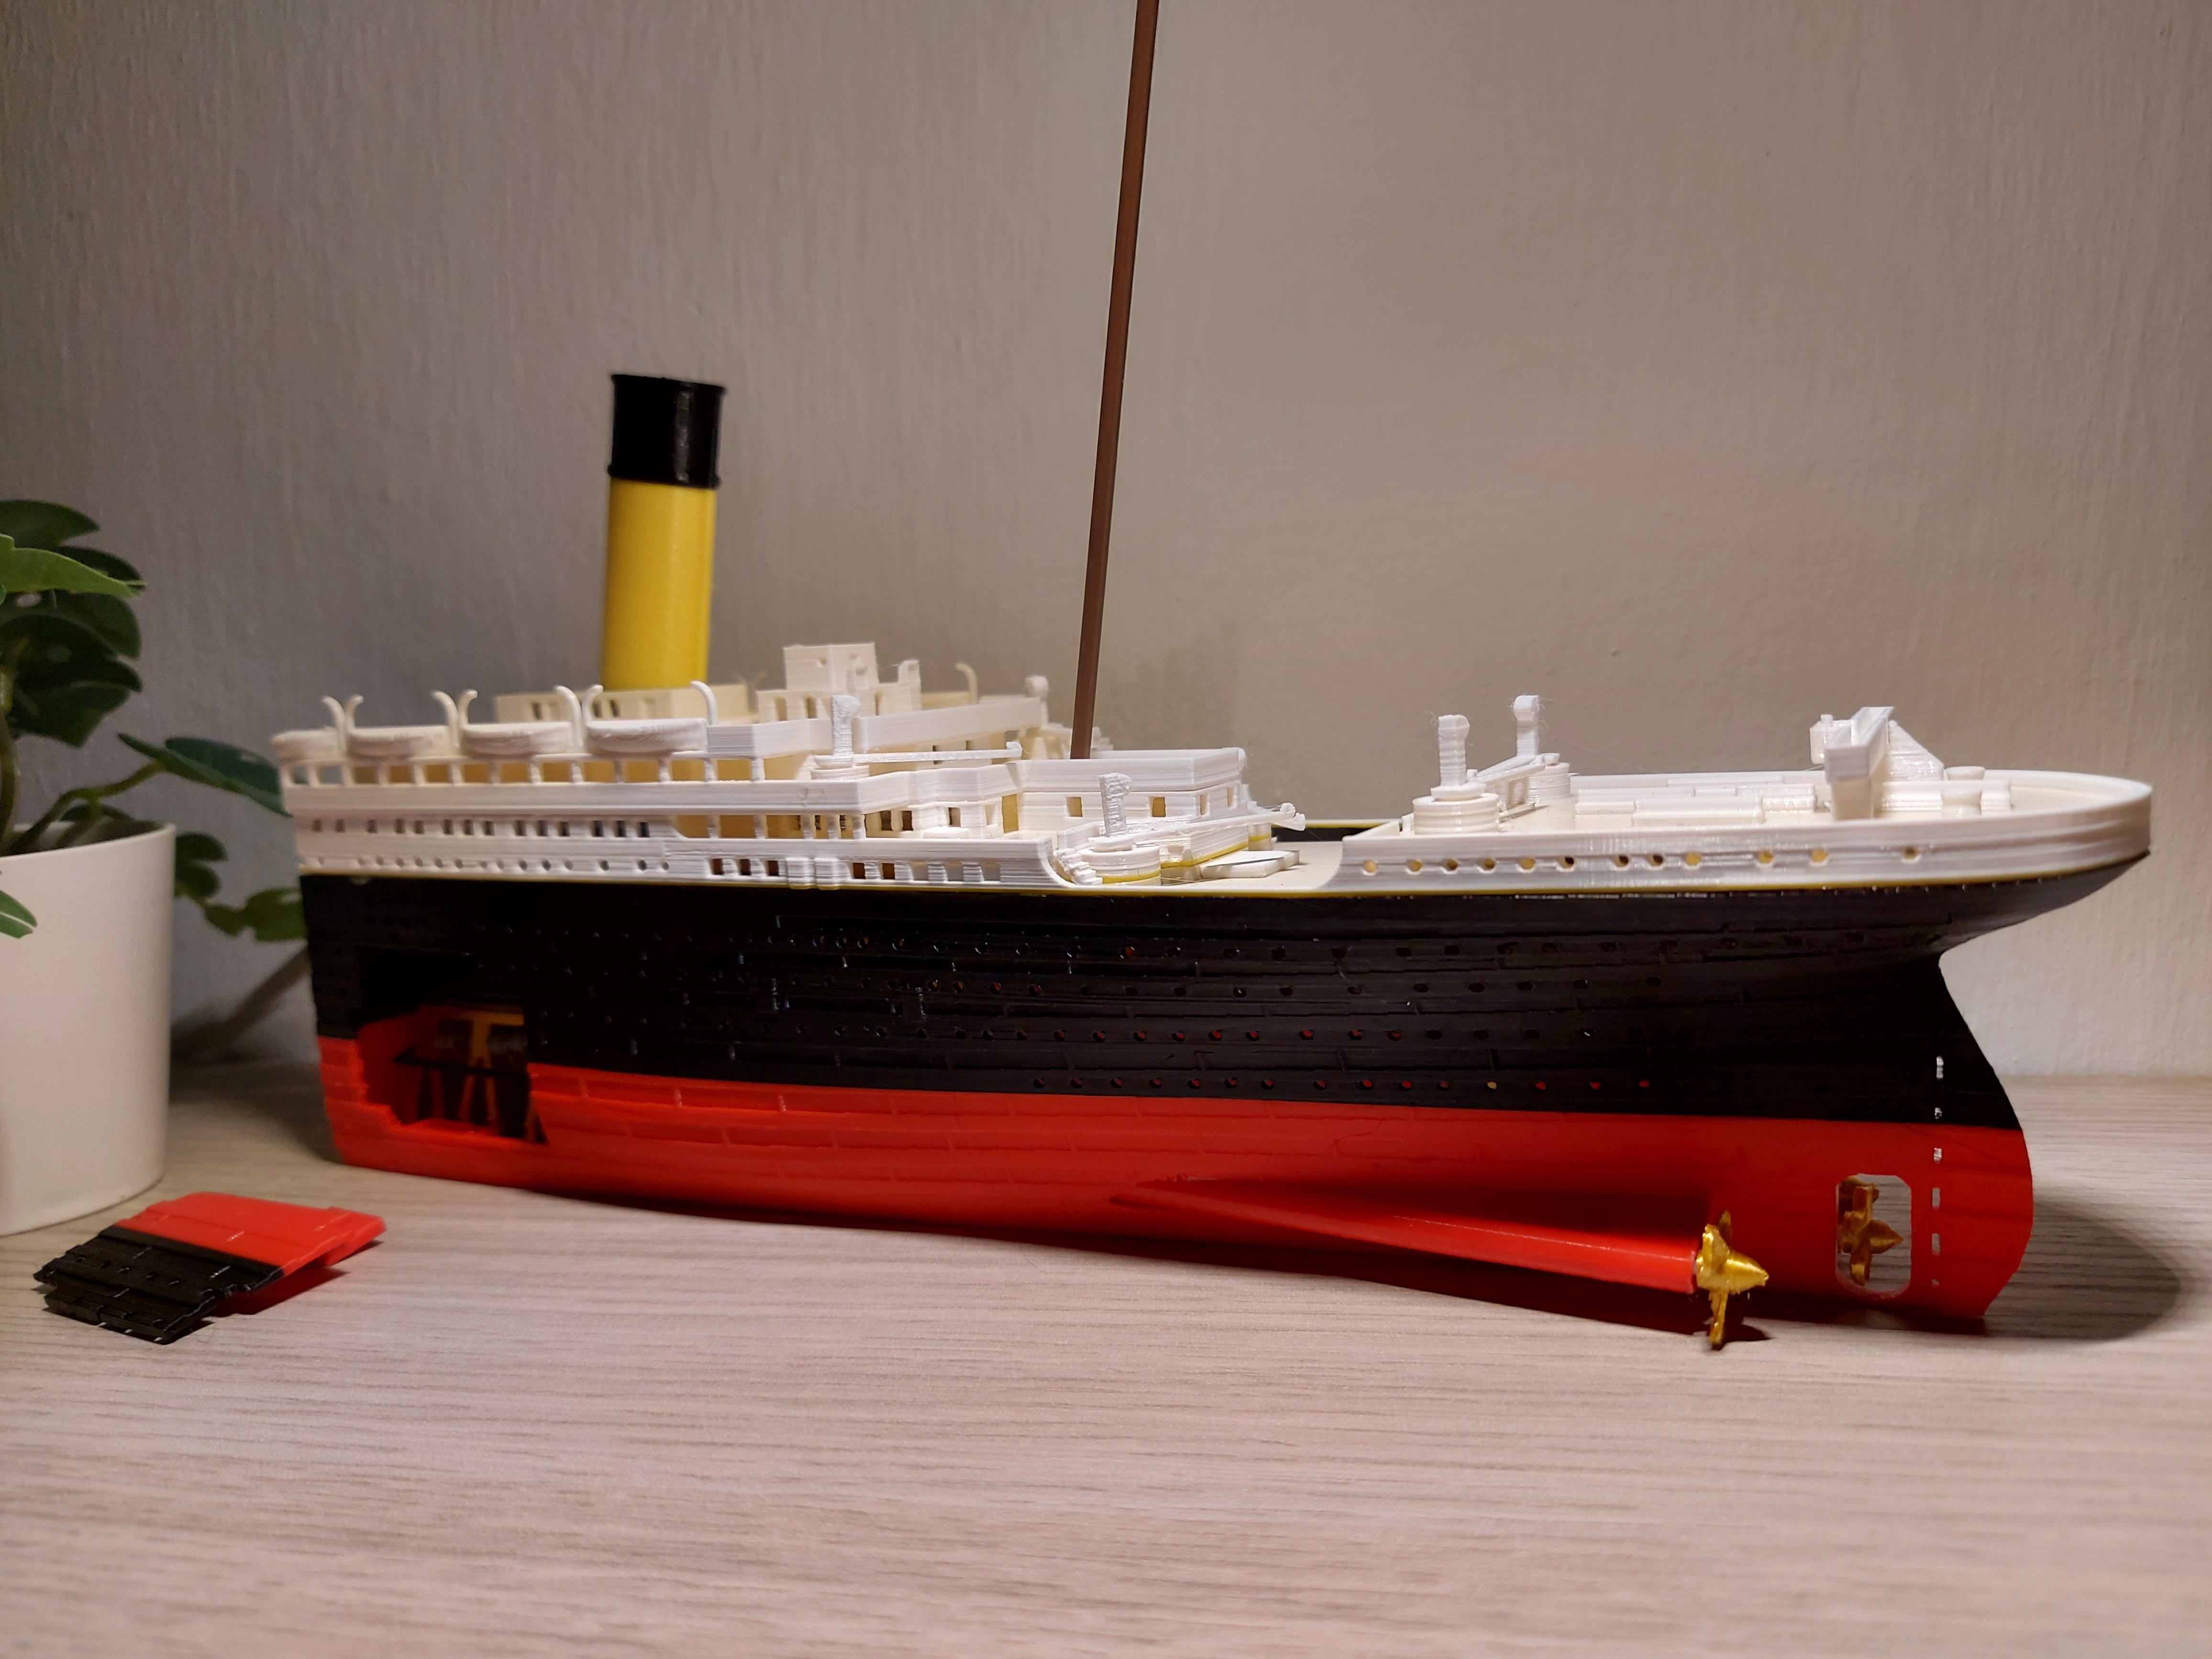 Maqueta Revell RMS Titanic Model Set - box containing the model